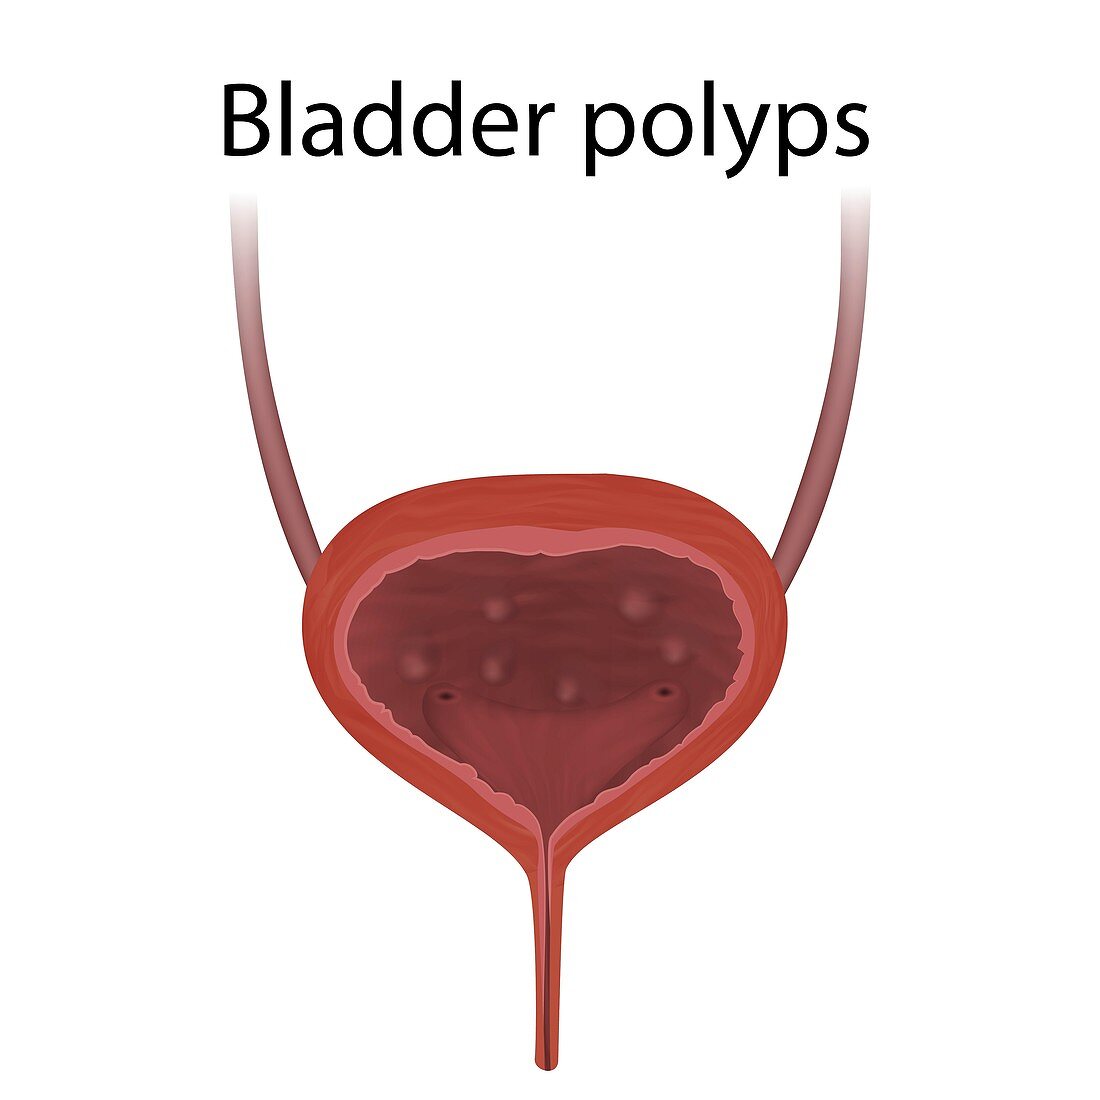 Bladder polyps, illustration